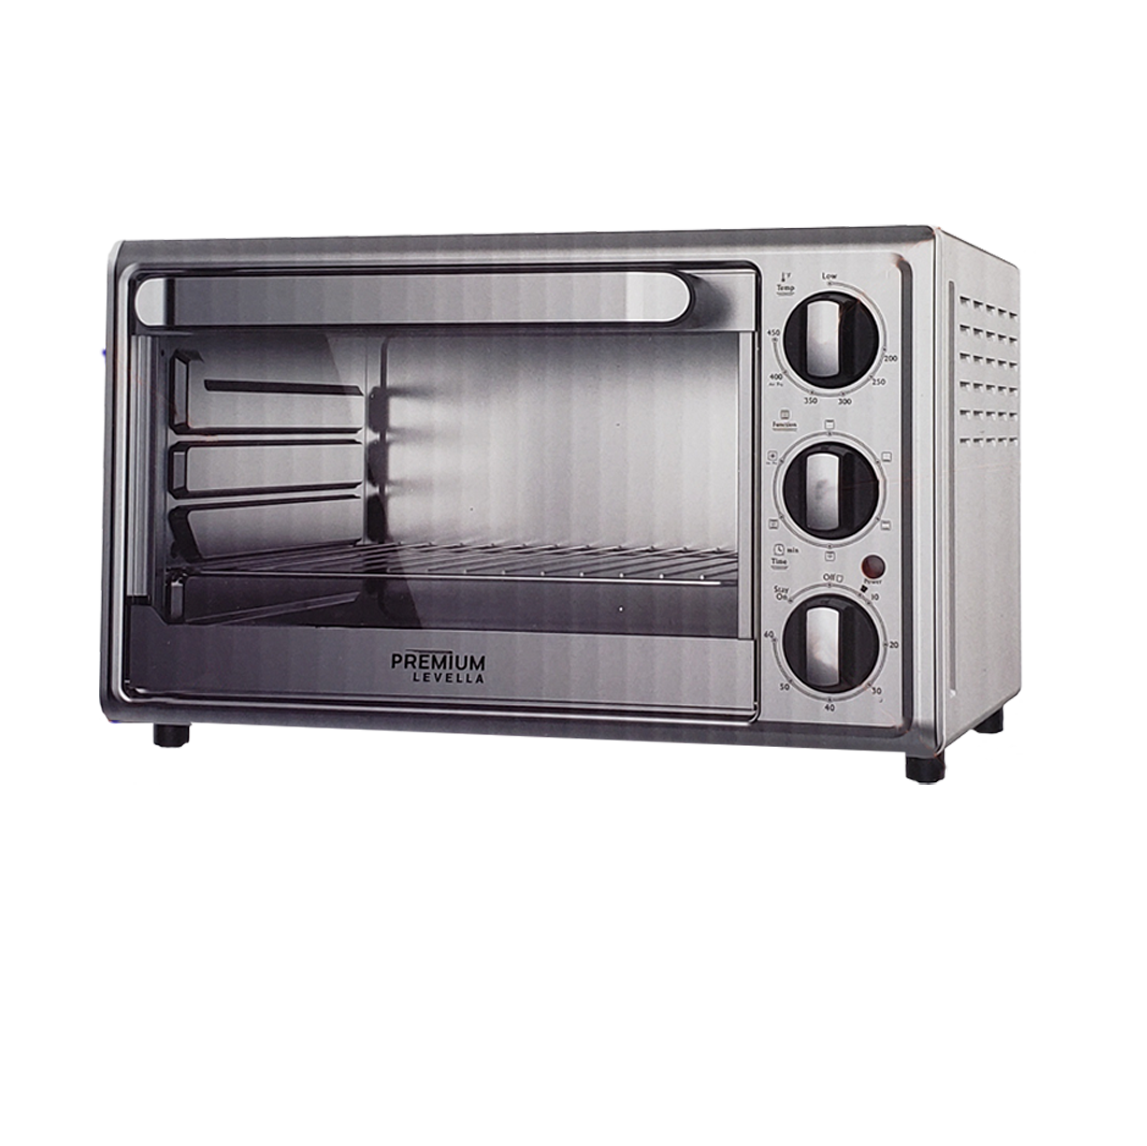 Premium multifunction toaster & Air fryer